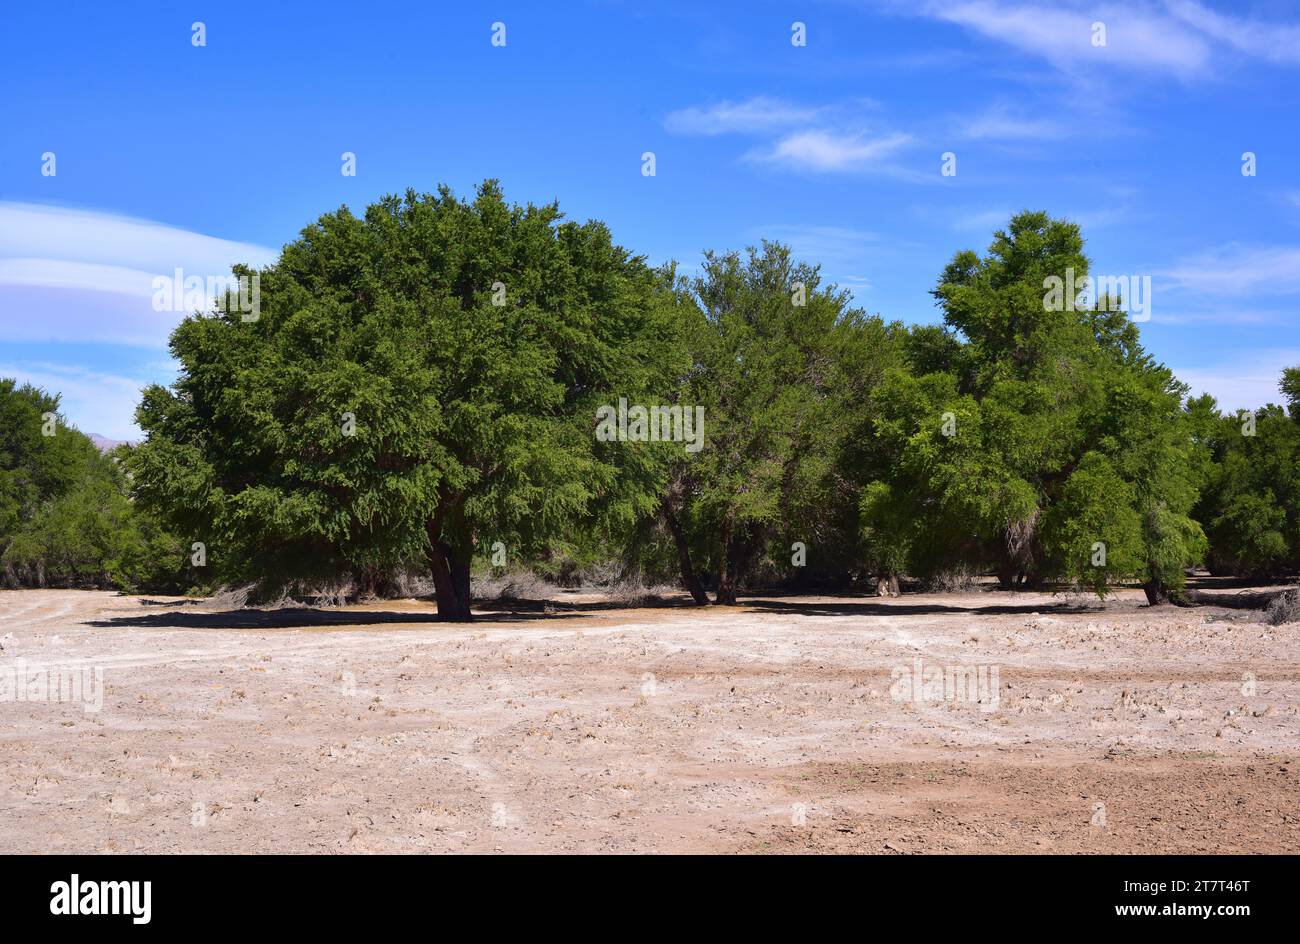 Tamarugo (Prosopis tamarugo) is an halophytic tree endemic to northern Chile. This photo was taken in Tambillo, Atacama Desert, Chile. Stock Photo